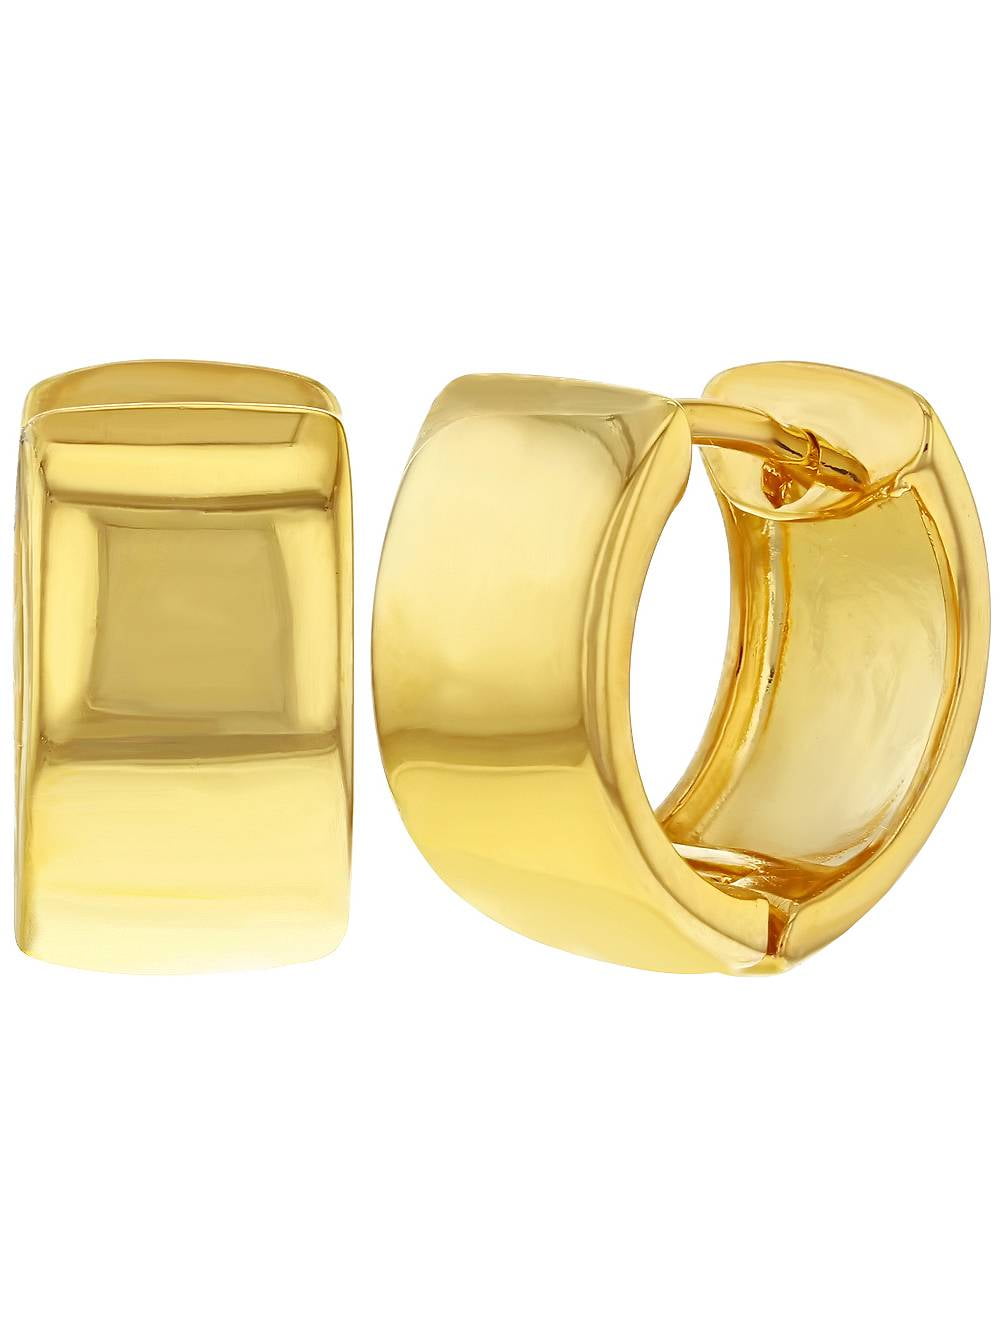 In Season Jewelry - 18k Gold Plated Comfortable Plain Wide Hoop